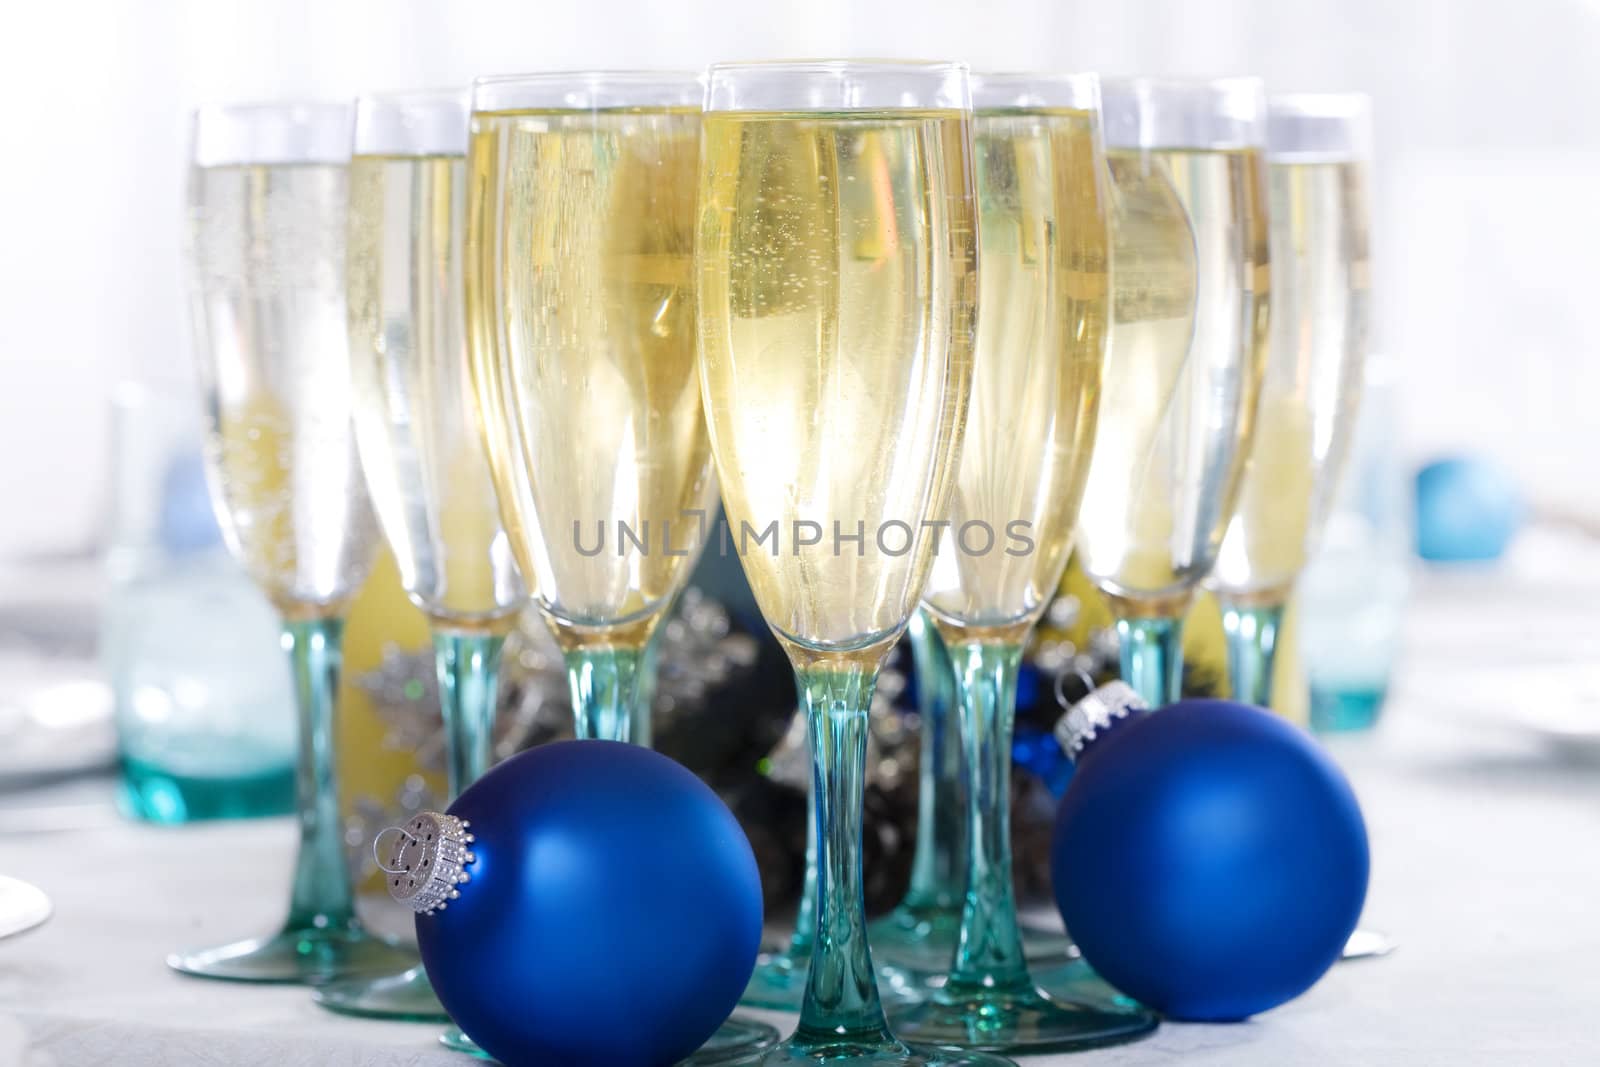 Flute wine glasses with sparkling,fizzy drink by jarenwicklund